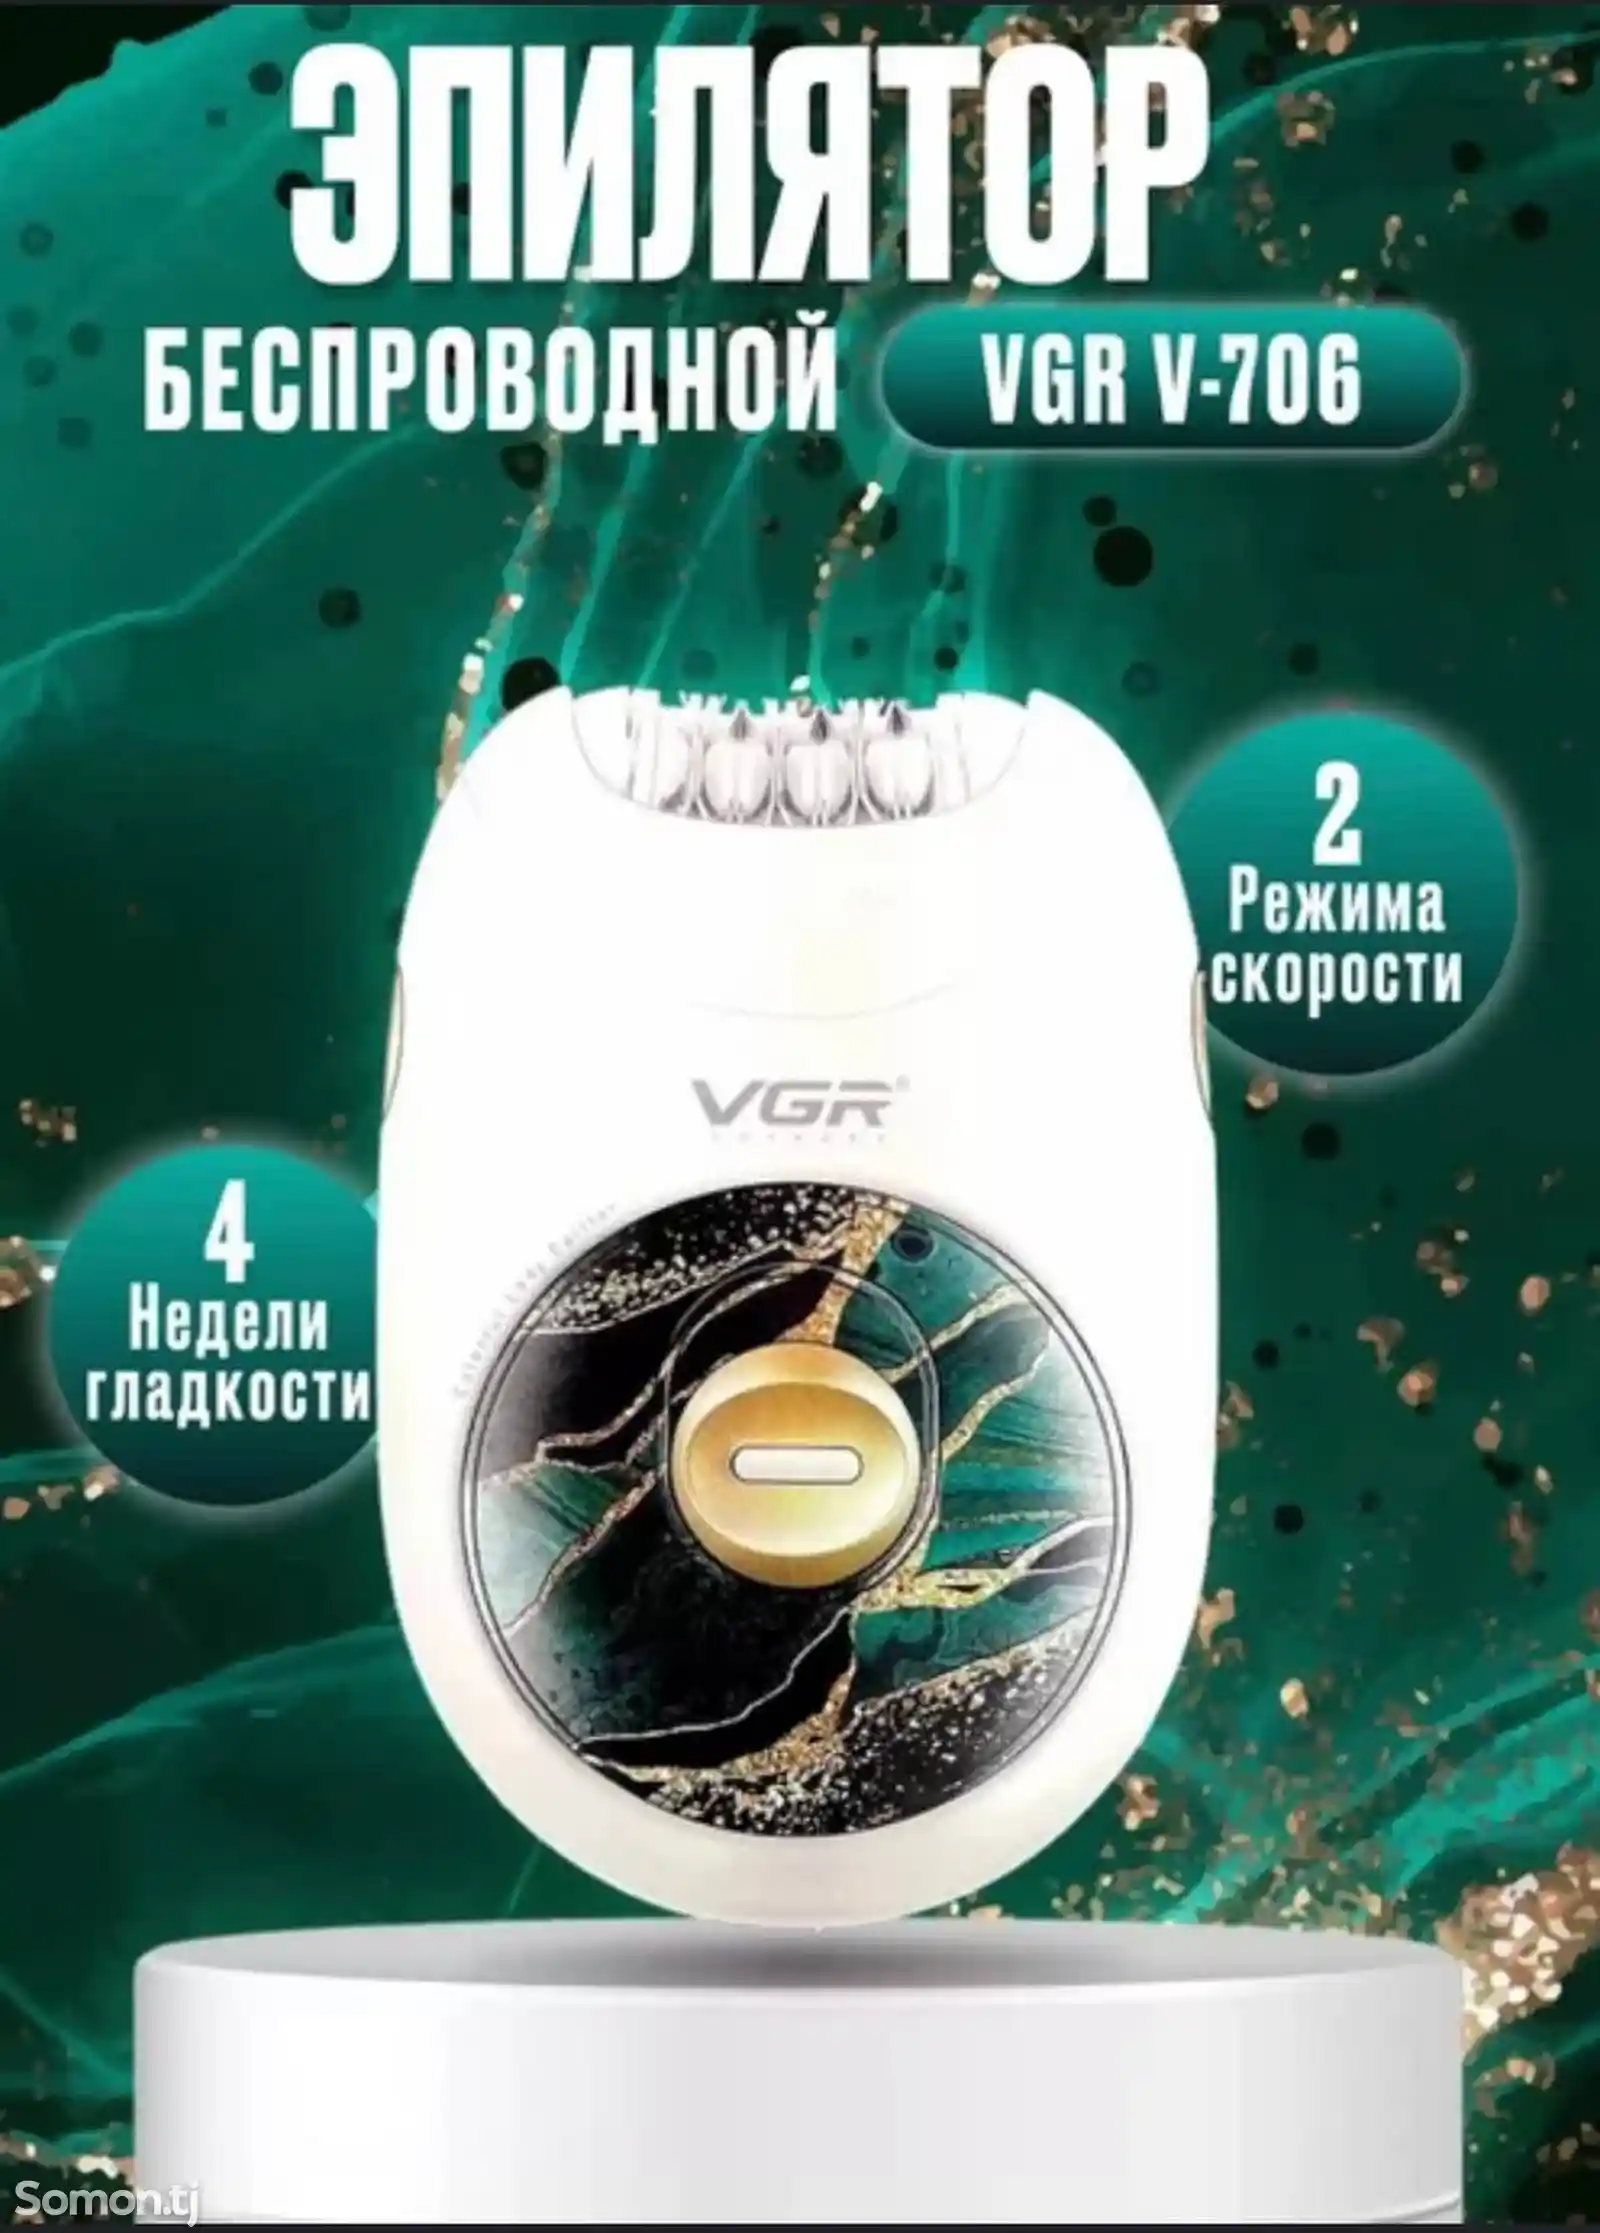 Эпилятор женский VGR V-706 белый аккумуляторный 2 скорости депилятор для тела-1